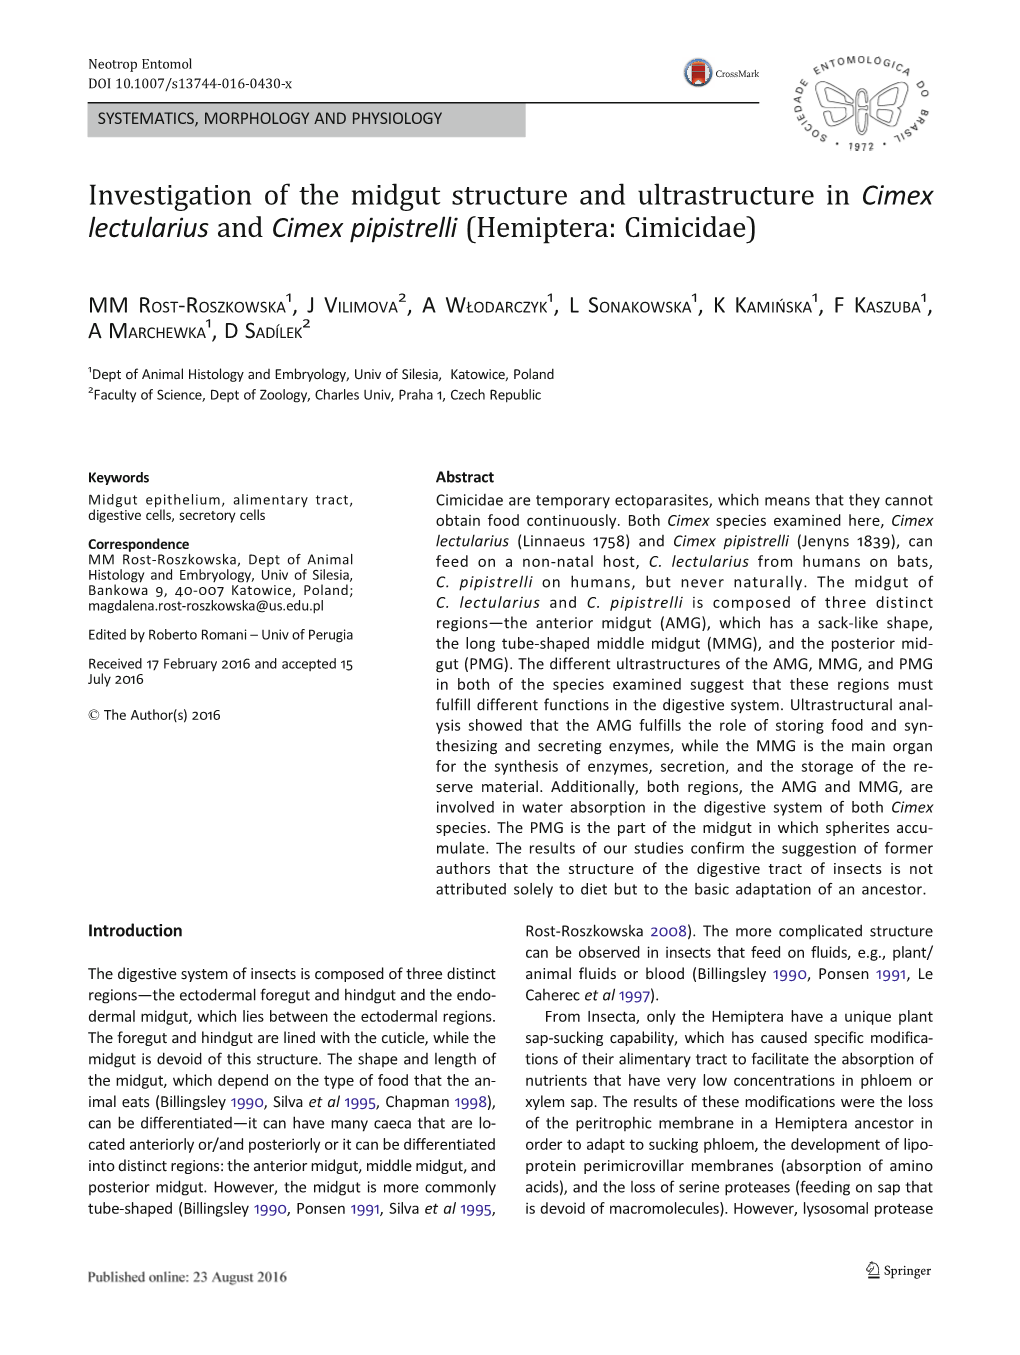 Investigation of the Midgut Structure and Ultrastructure in Cimex Lectularius and Cimex Pipistrelli (Hemiptera: Cimicidae)